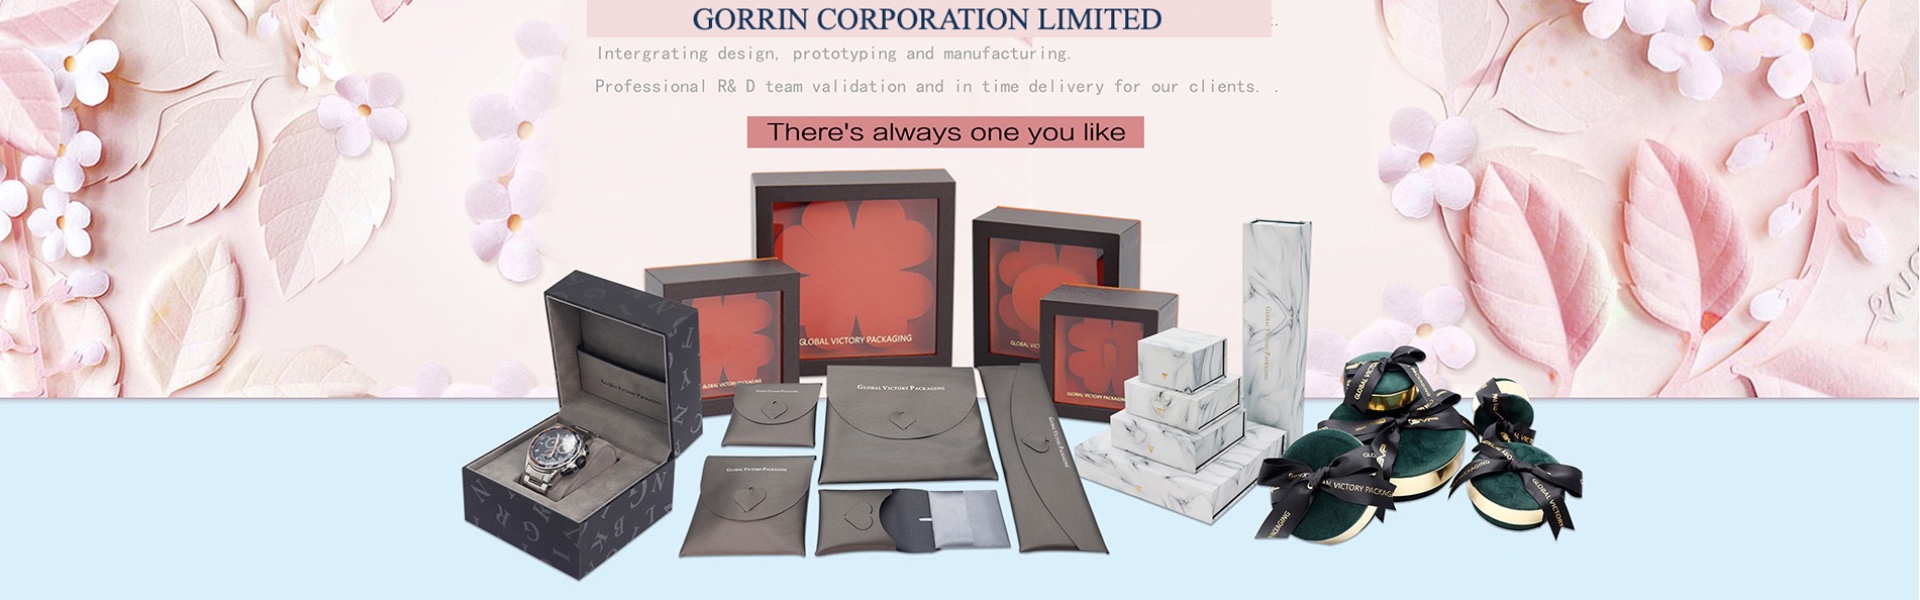 шкатулка, ювелирные изделия, шкатулка,Gorrin corporation limited